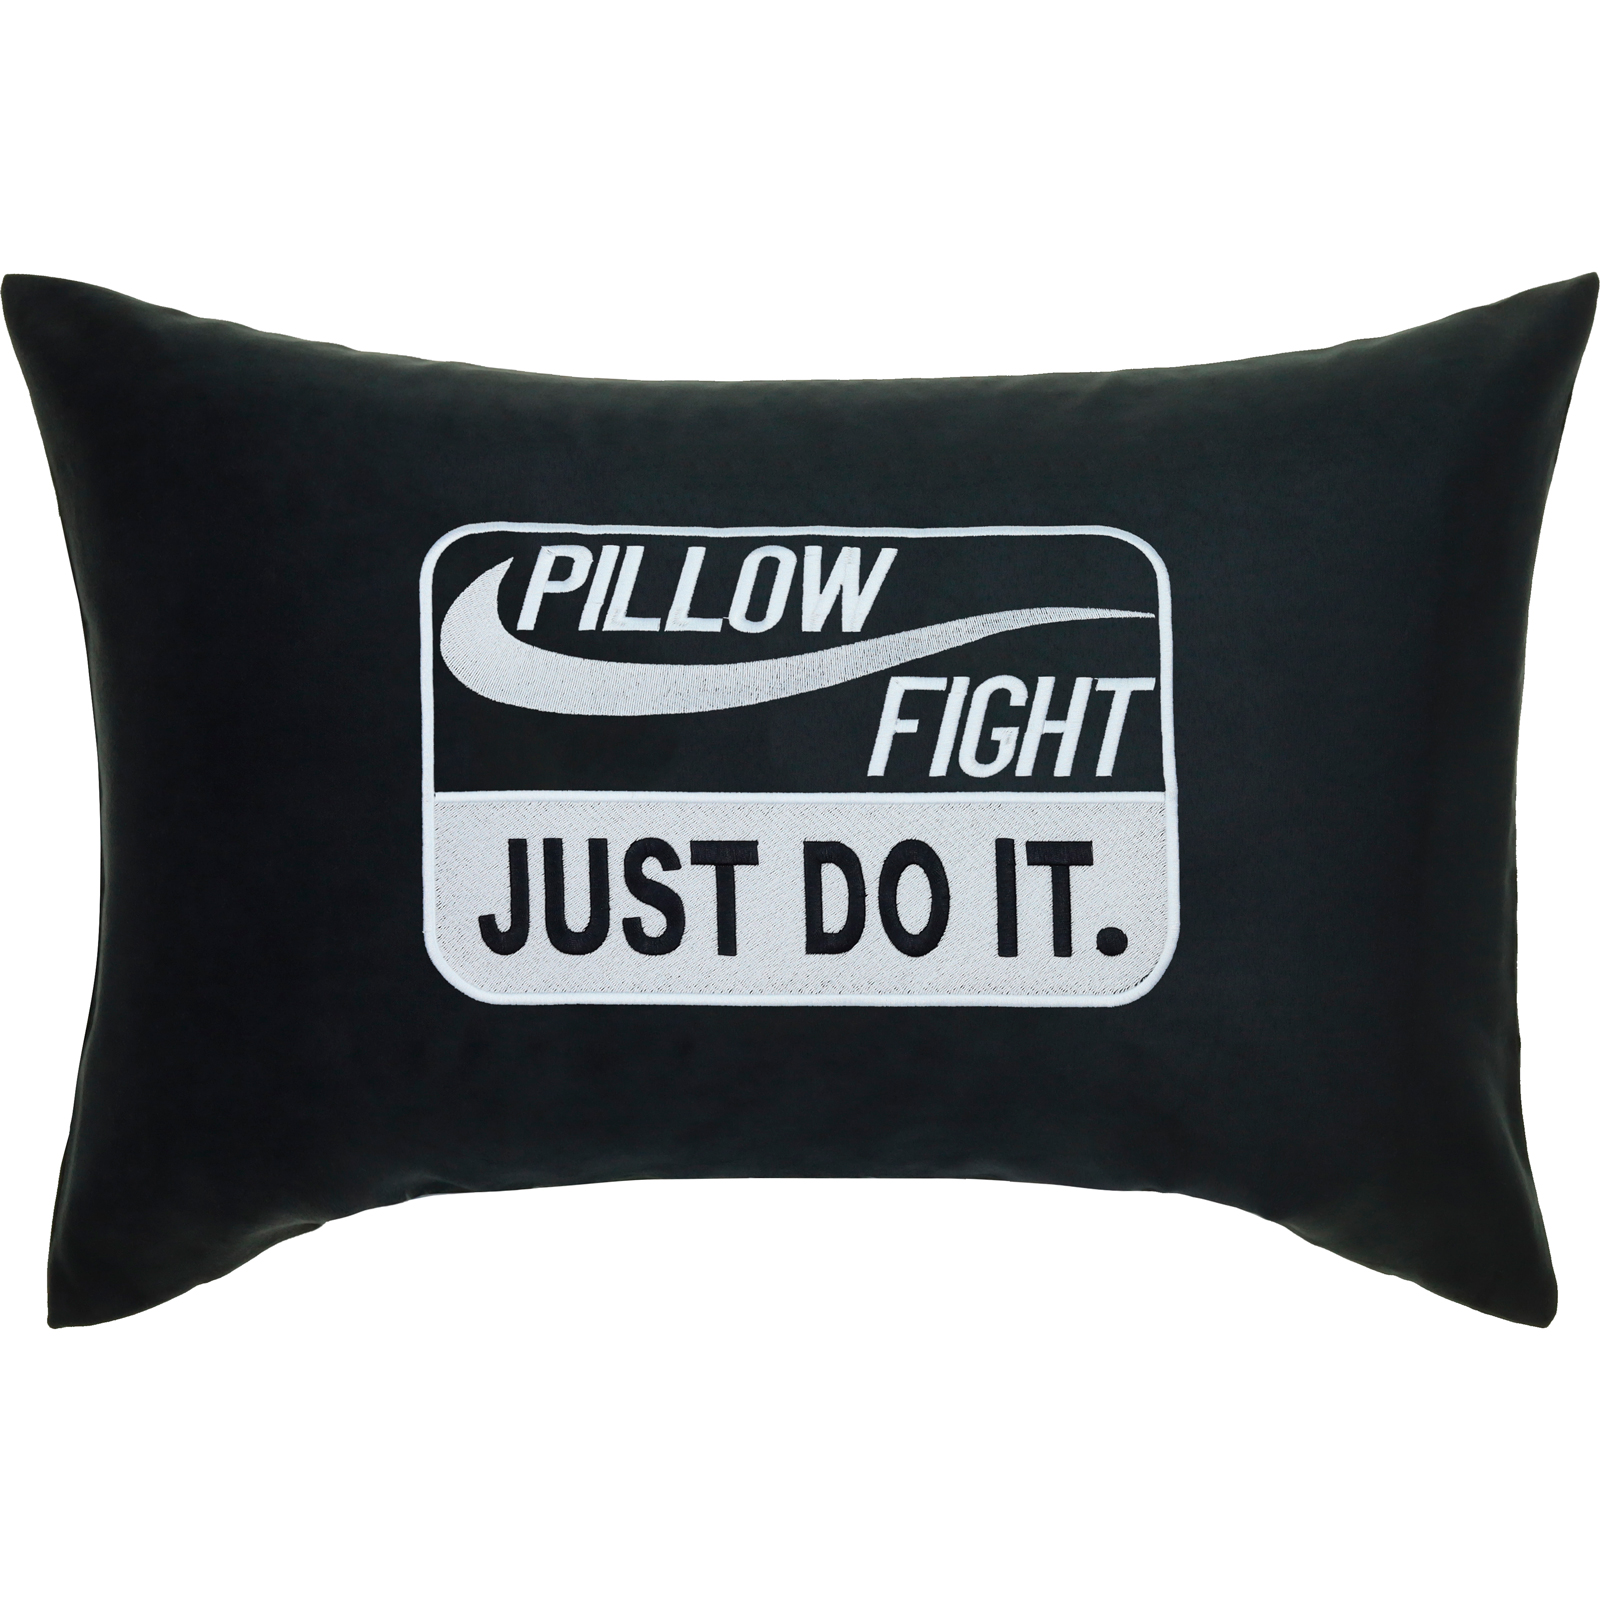 Pillow Fight